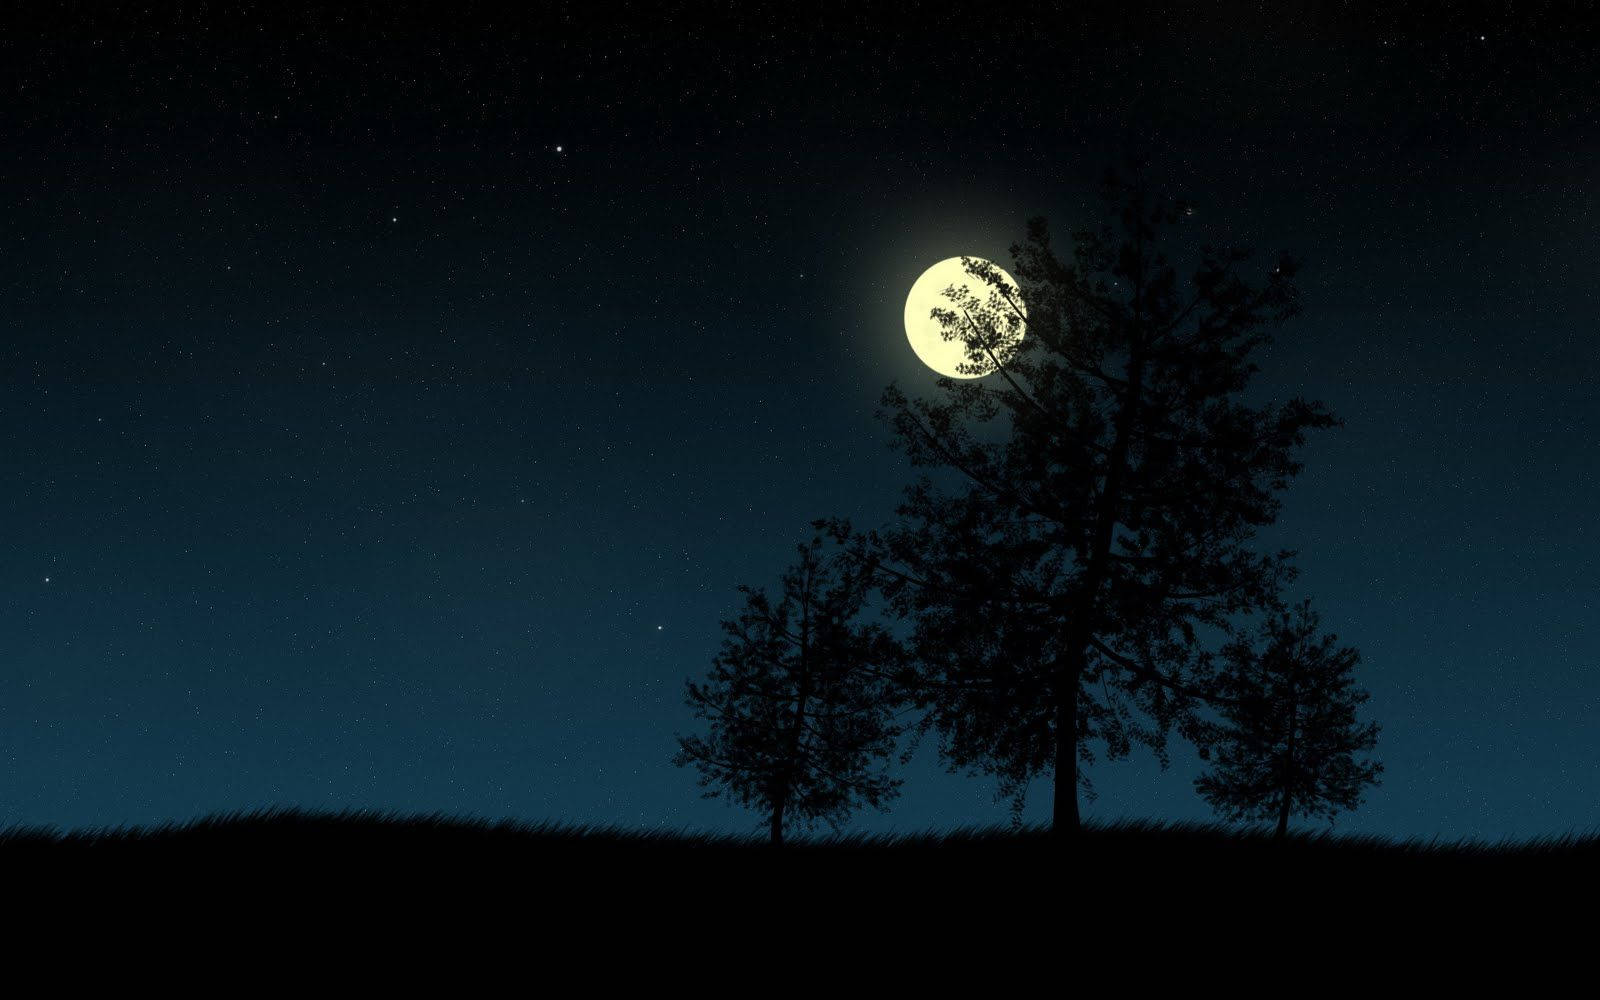 Dark Night With Tree And Moon